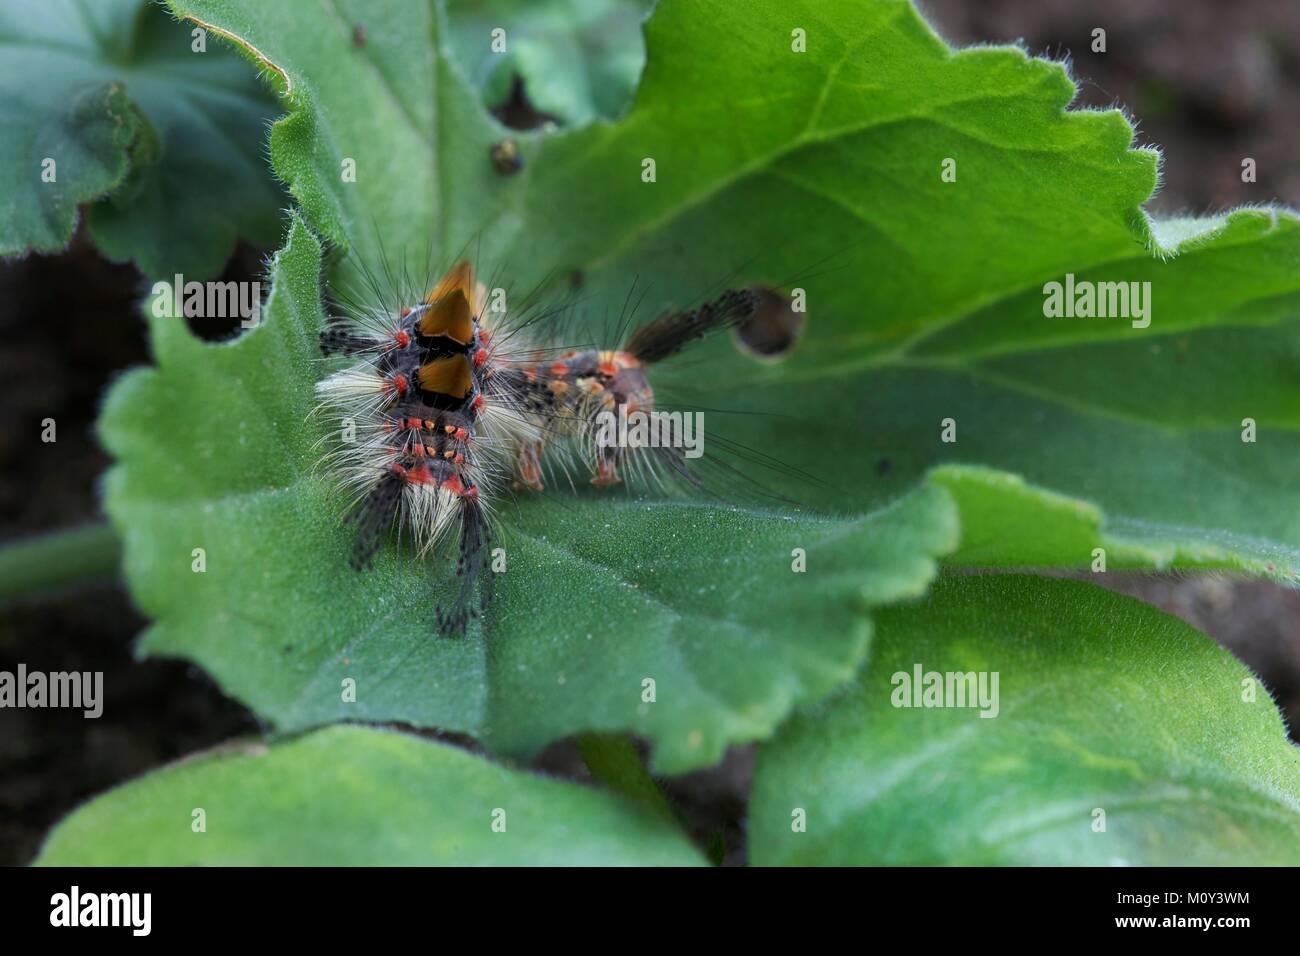 France, Morbihan, Vannes, Lepidoptera, Lymantriidae, Rusty tussock moth (Orgyia antiqua) Stock Photo